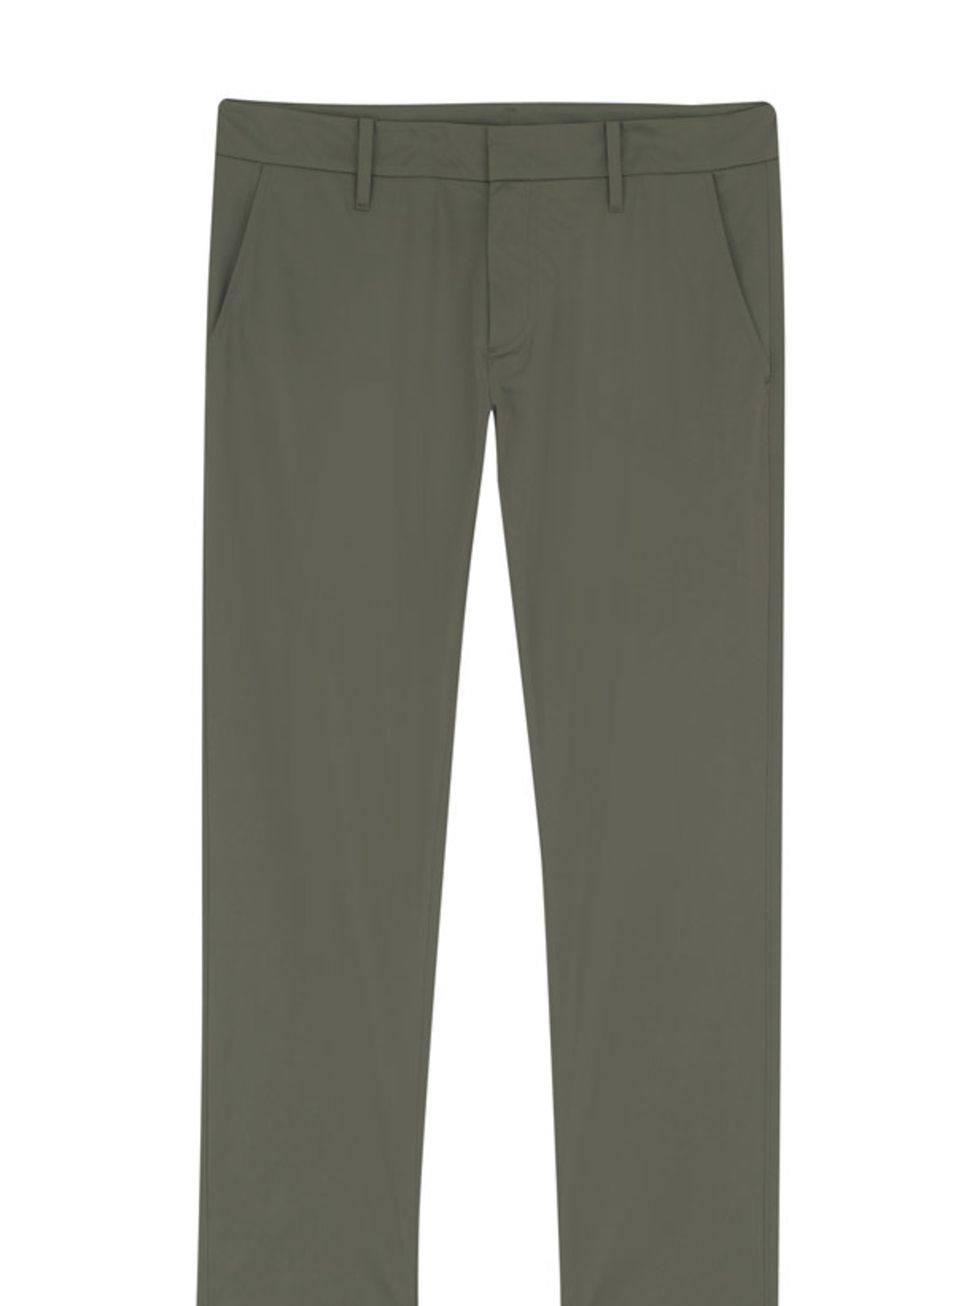 <p>Straight leg khaki trousers, £39.99, by <a href="http://www.uniqlo.co.uk/catalogue/women/j/422453-olive-j-straight-trousers">+J Uniqlo</a> </p>